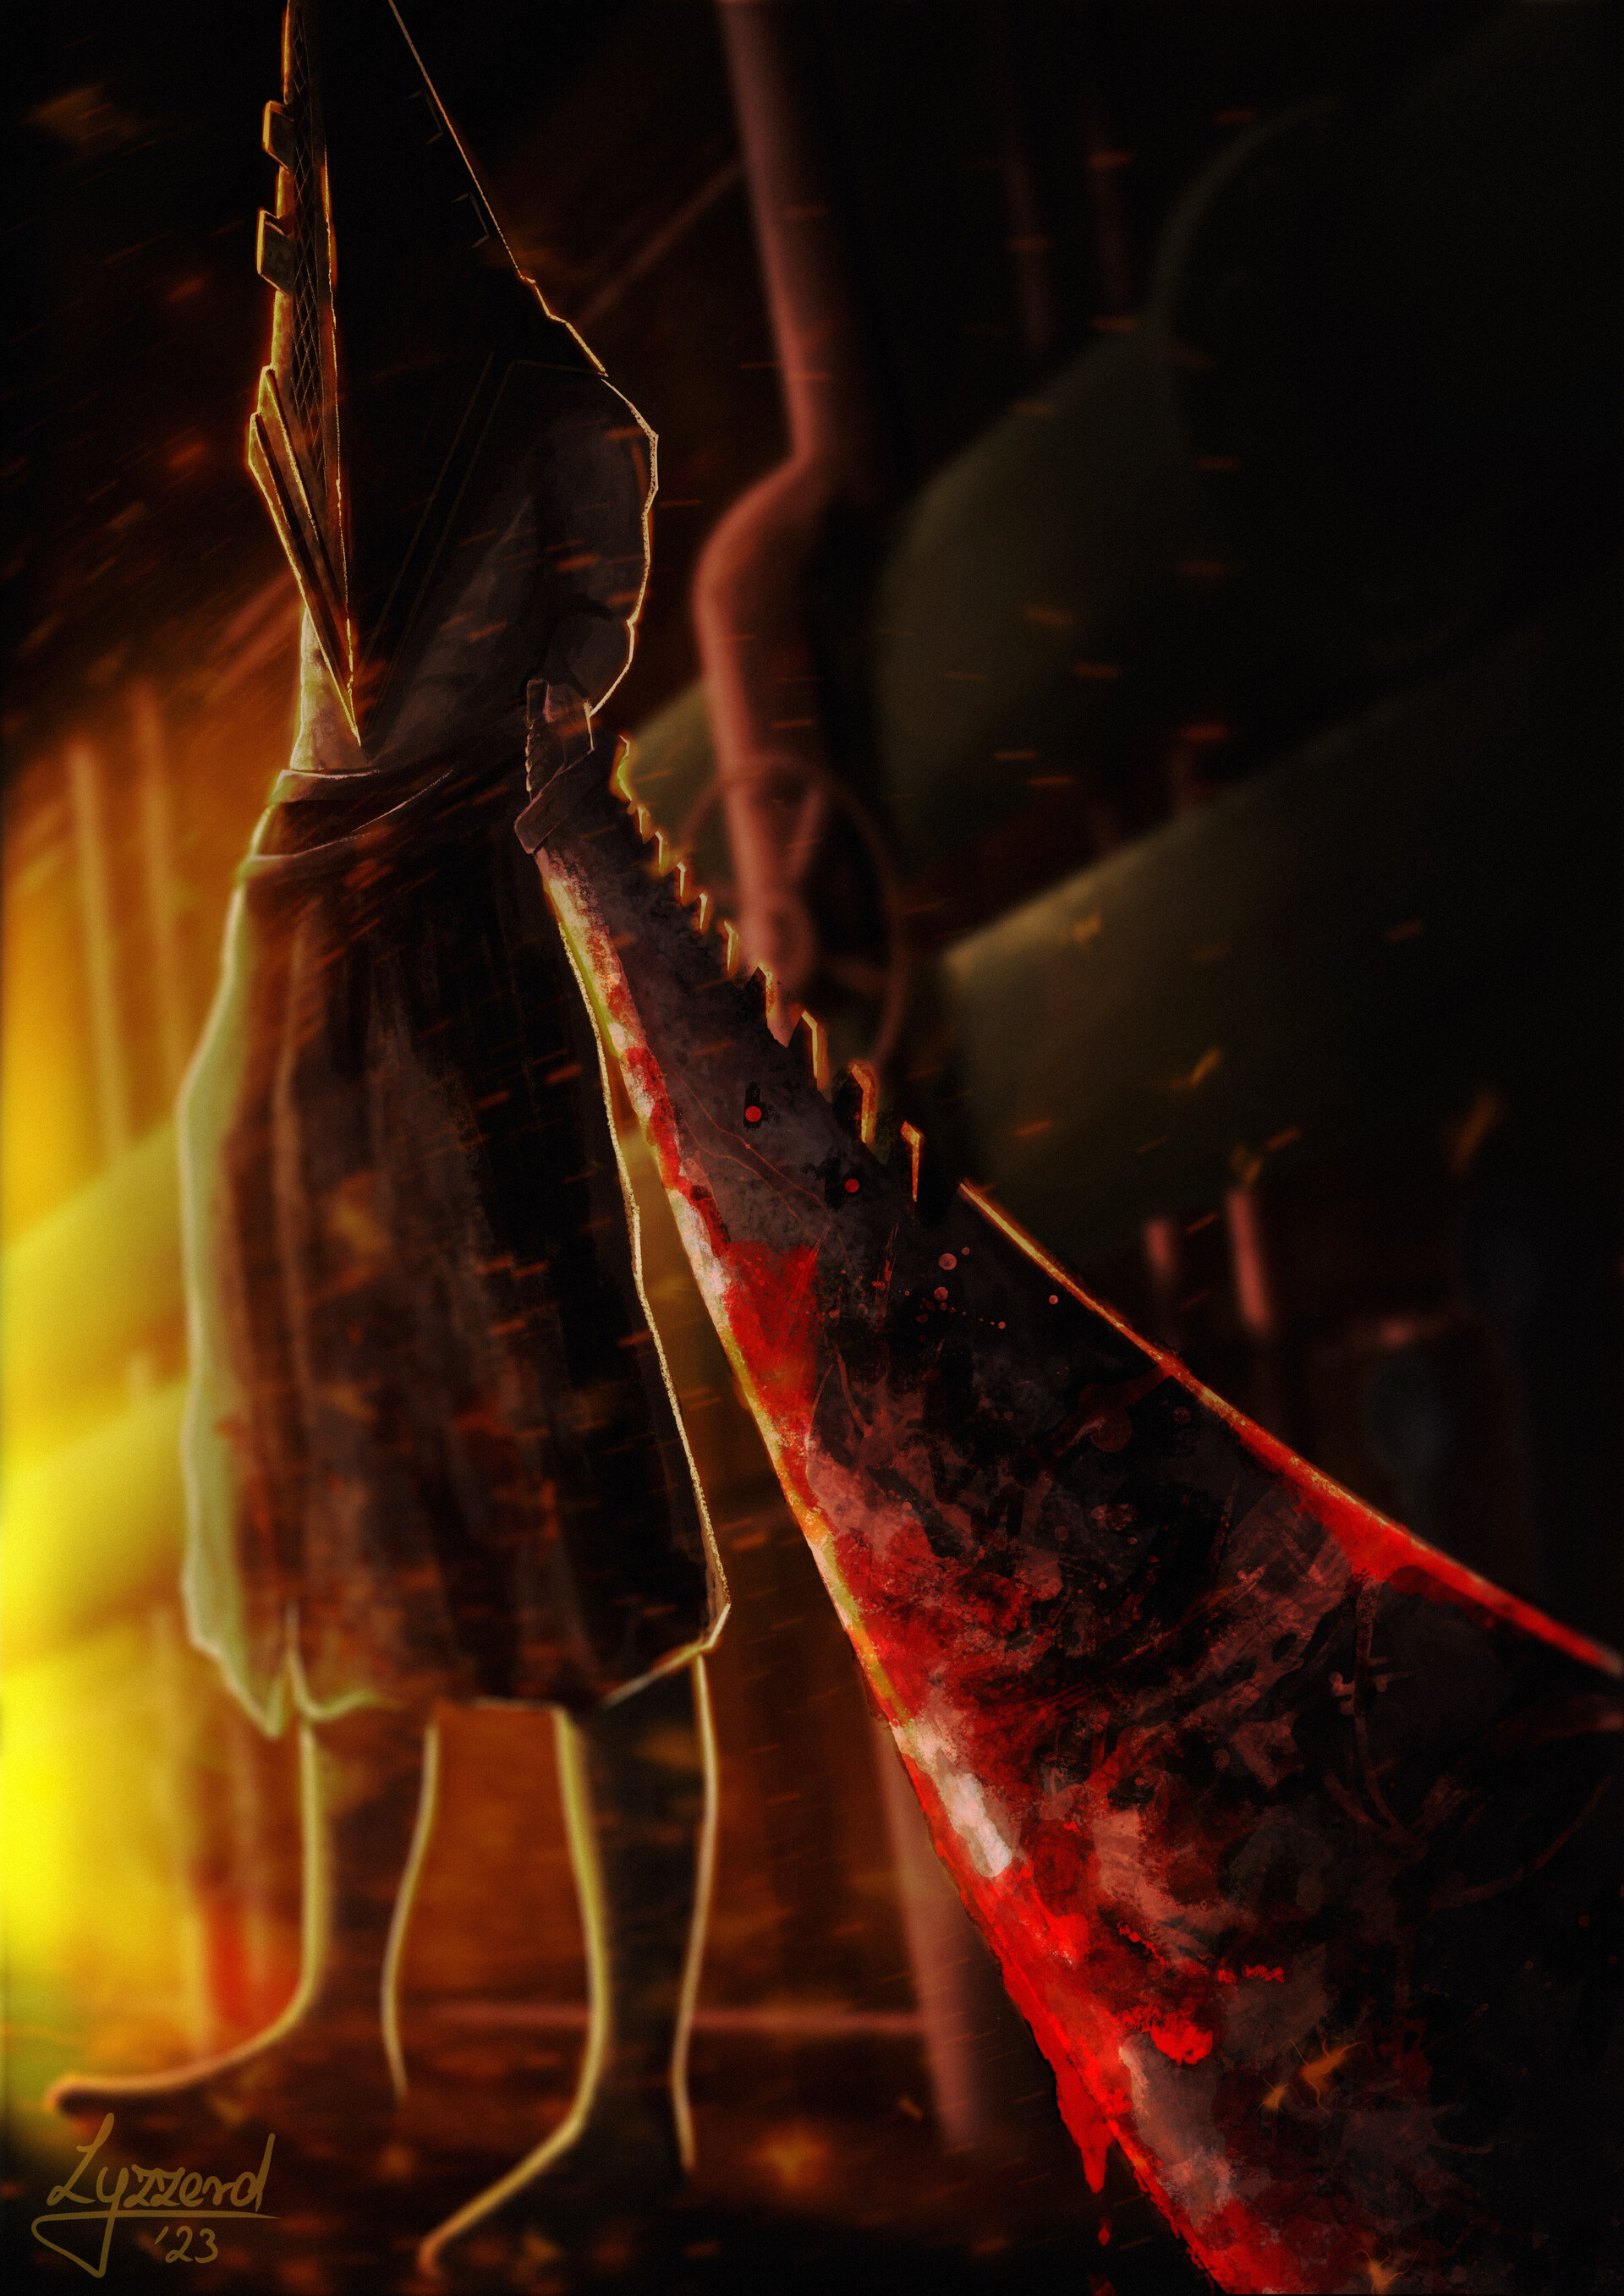 Silent Hill - Pyramid Head - Fan Art - Colours — ScudsWorth Productions